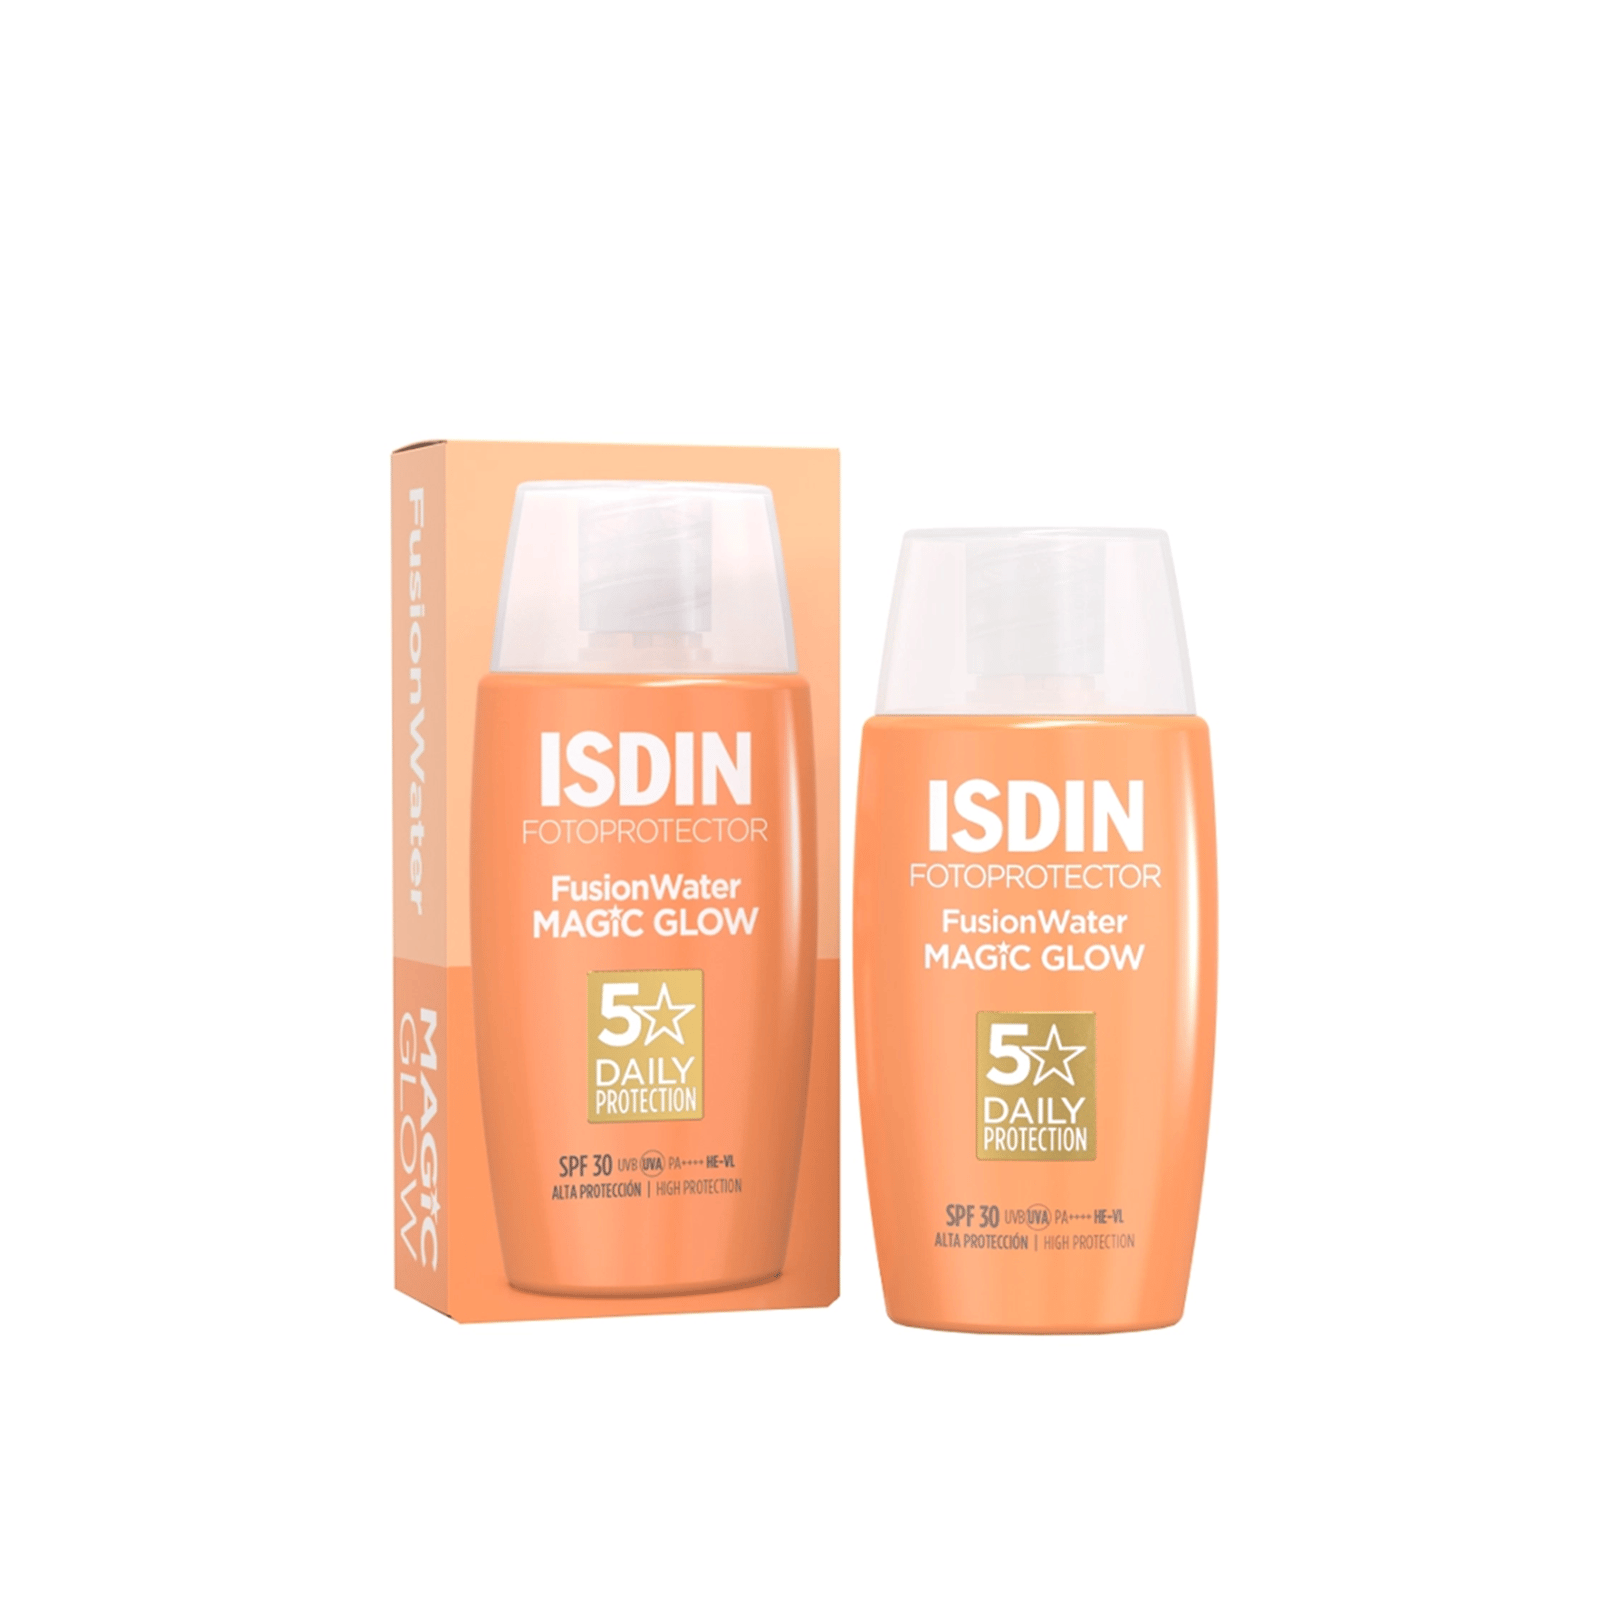 ISDIN Fotoprotector Fusion Water Magic Glow Sunscreen SPF30 50ml